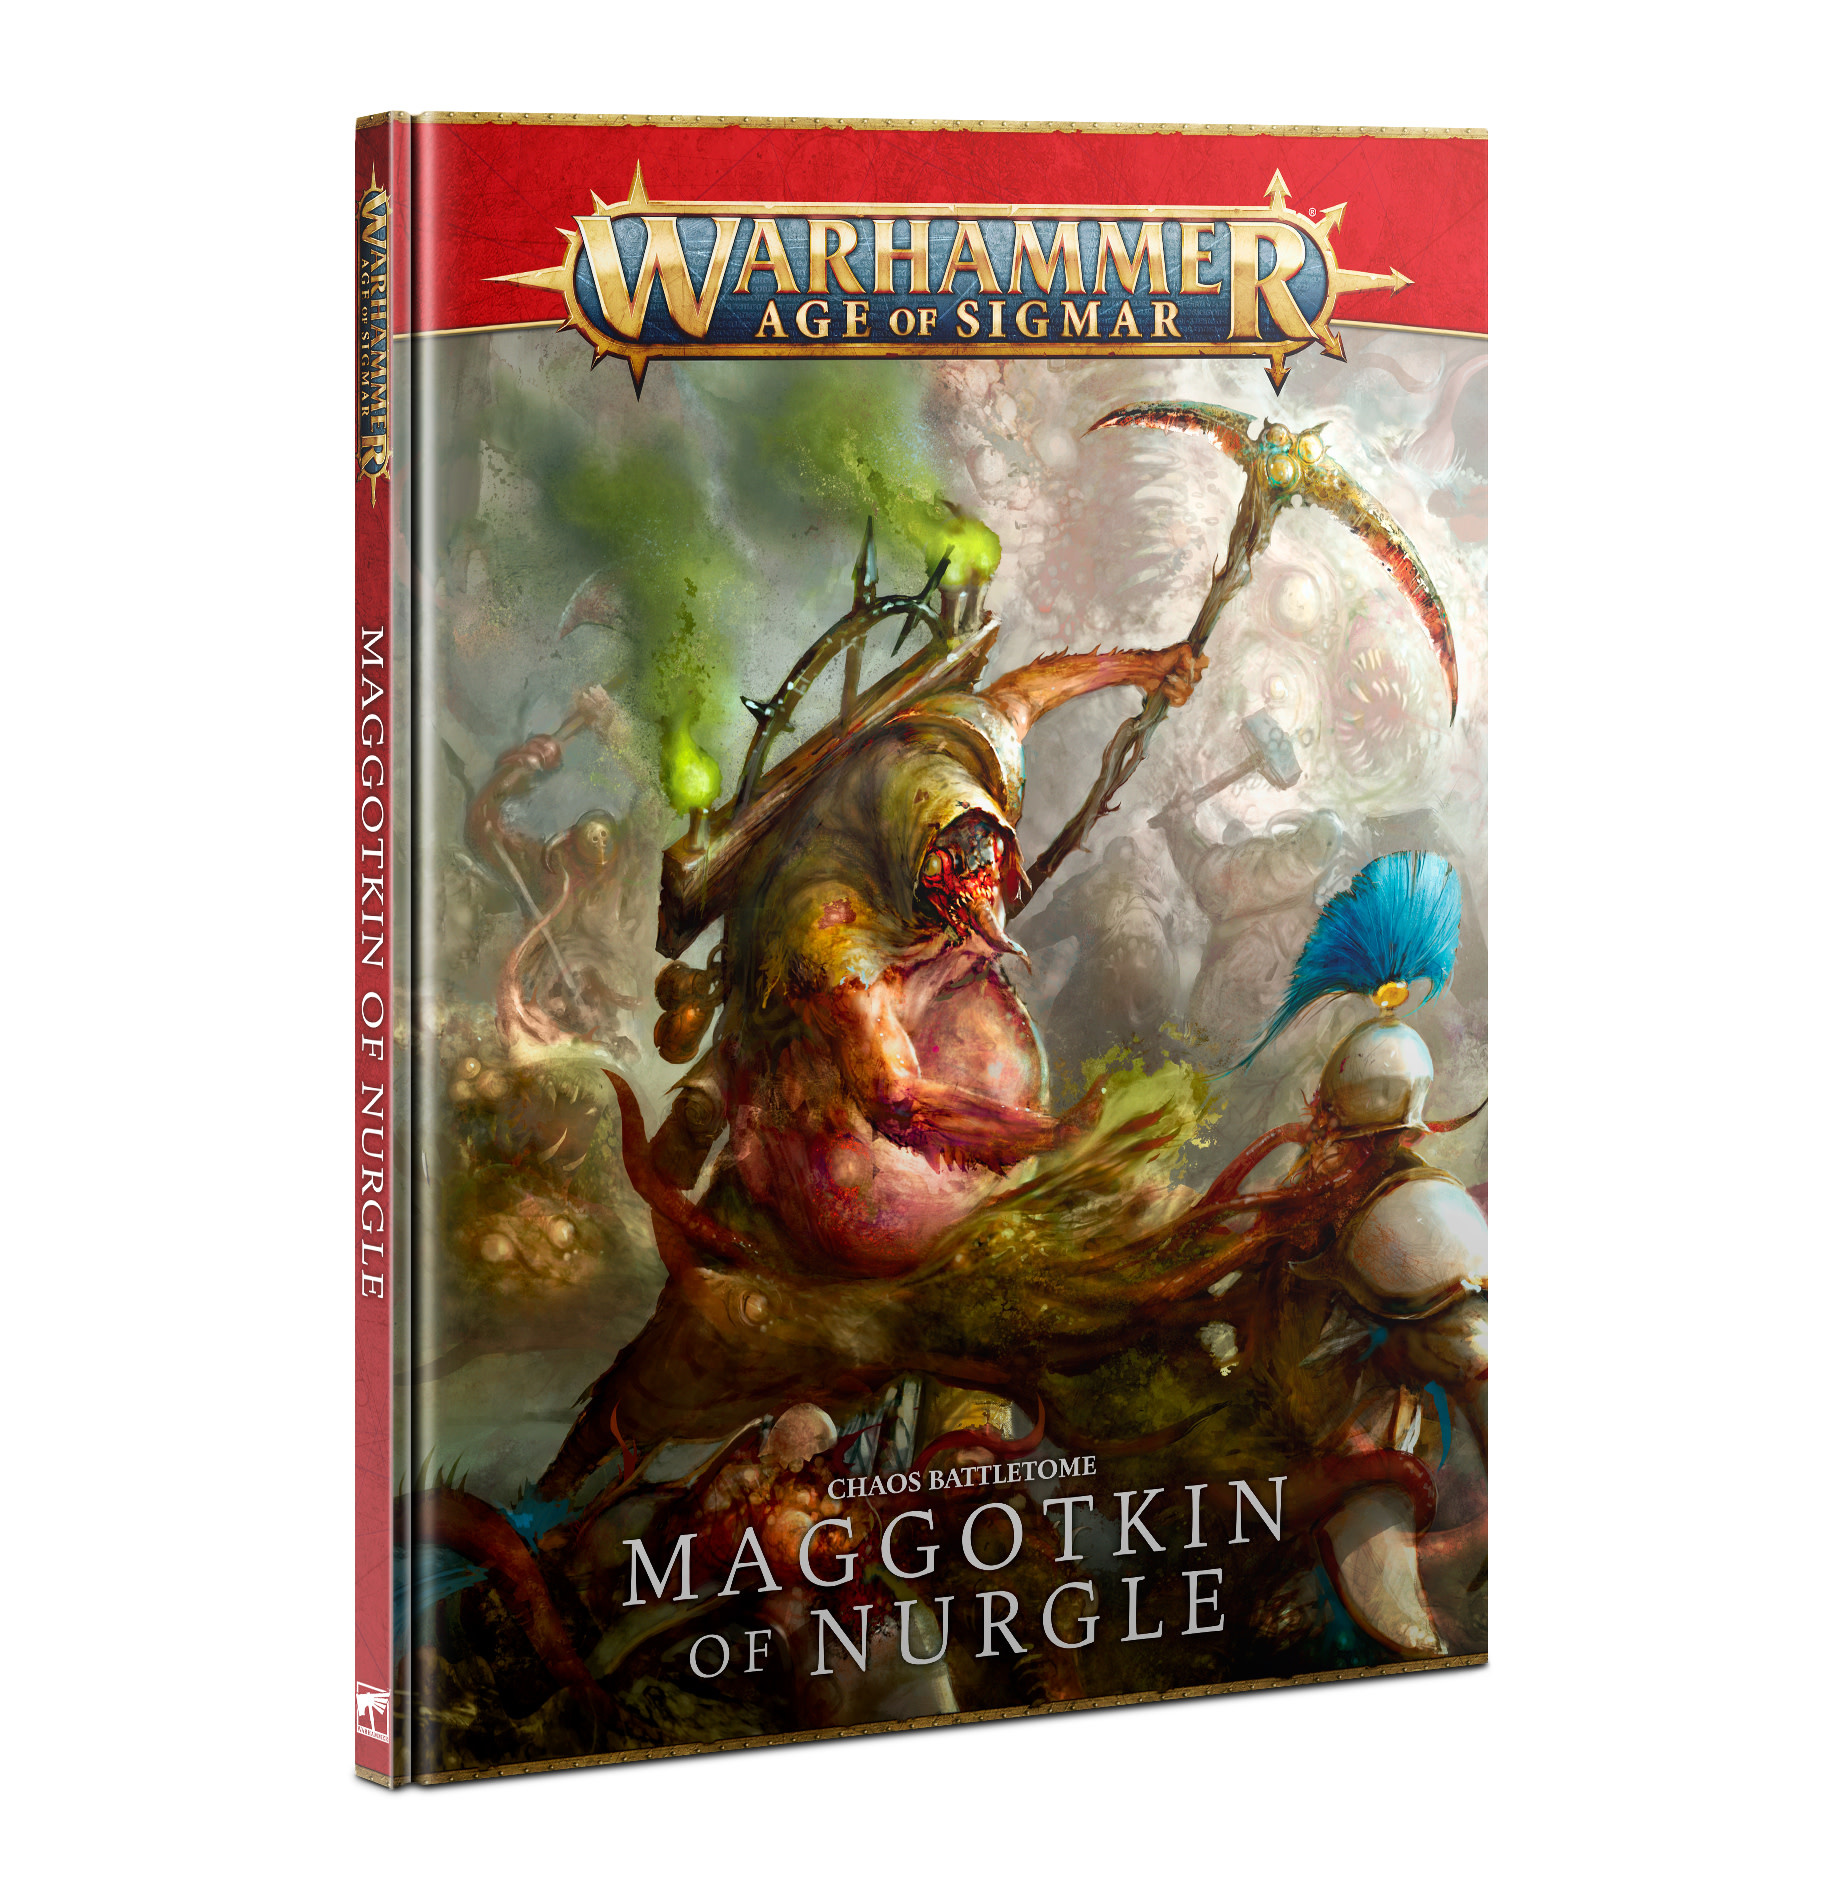 Warhammer Age of Sigmar Chaos Battletome: Maggotkin of Nurgle